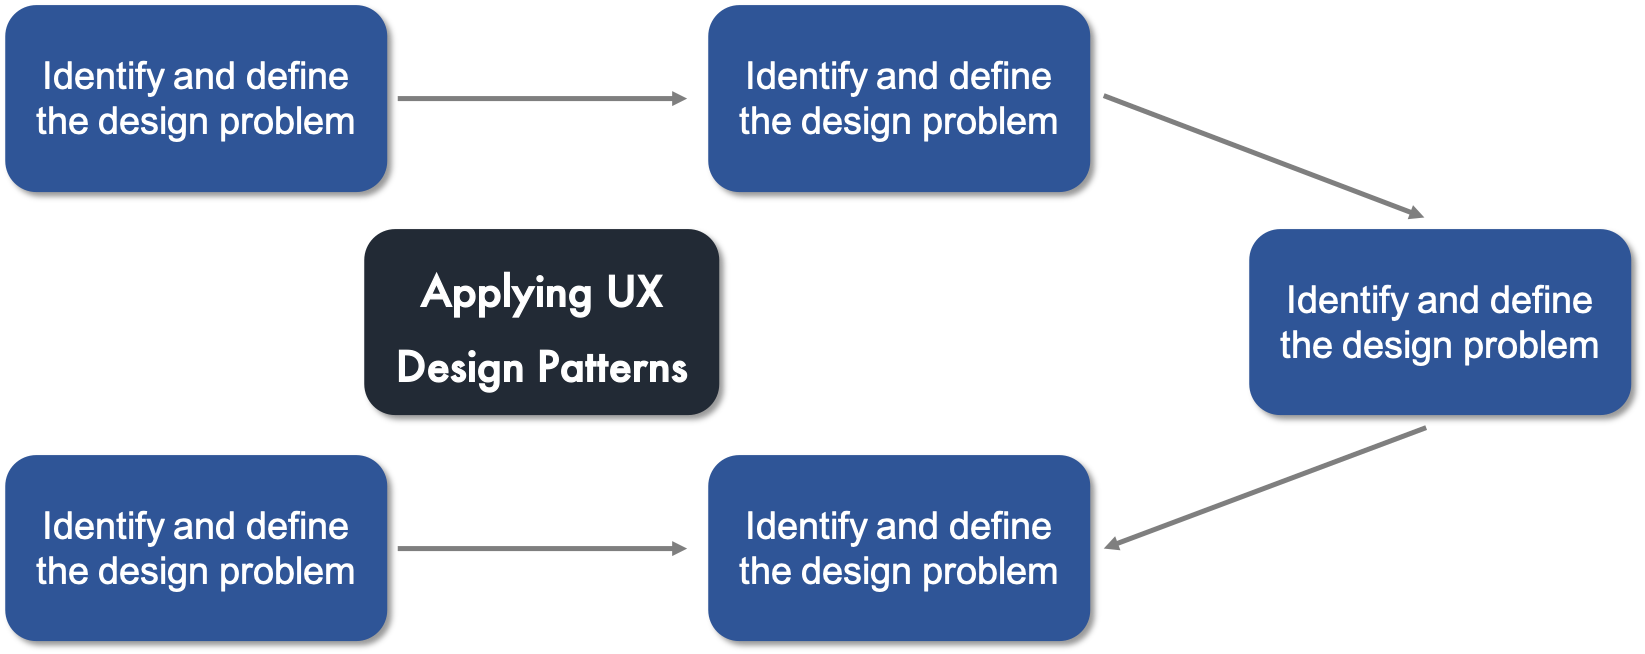 Applying UX Design Patterns